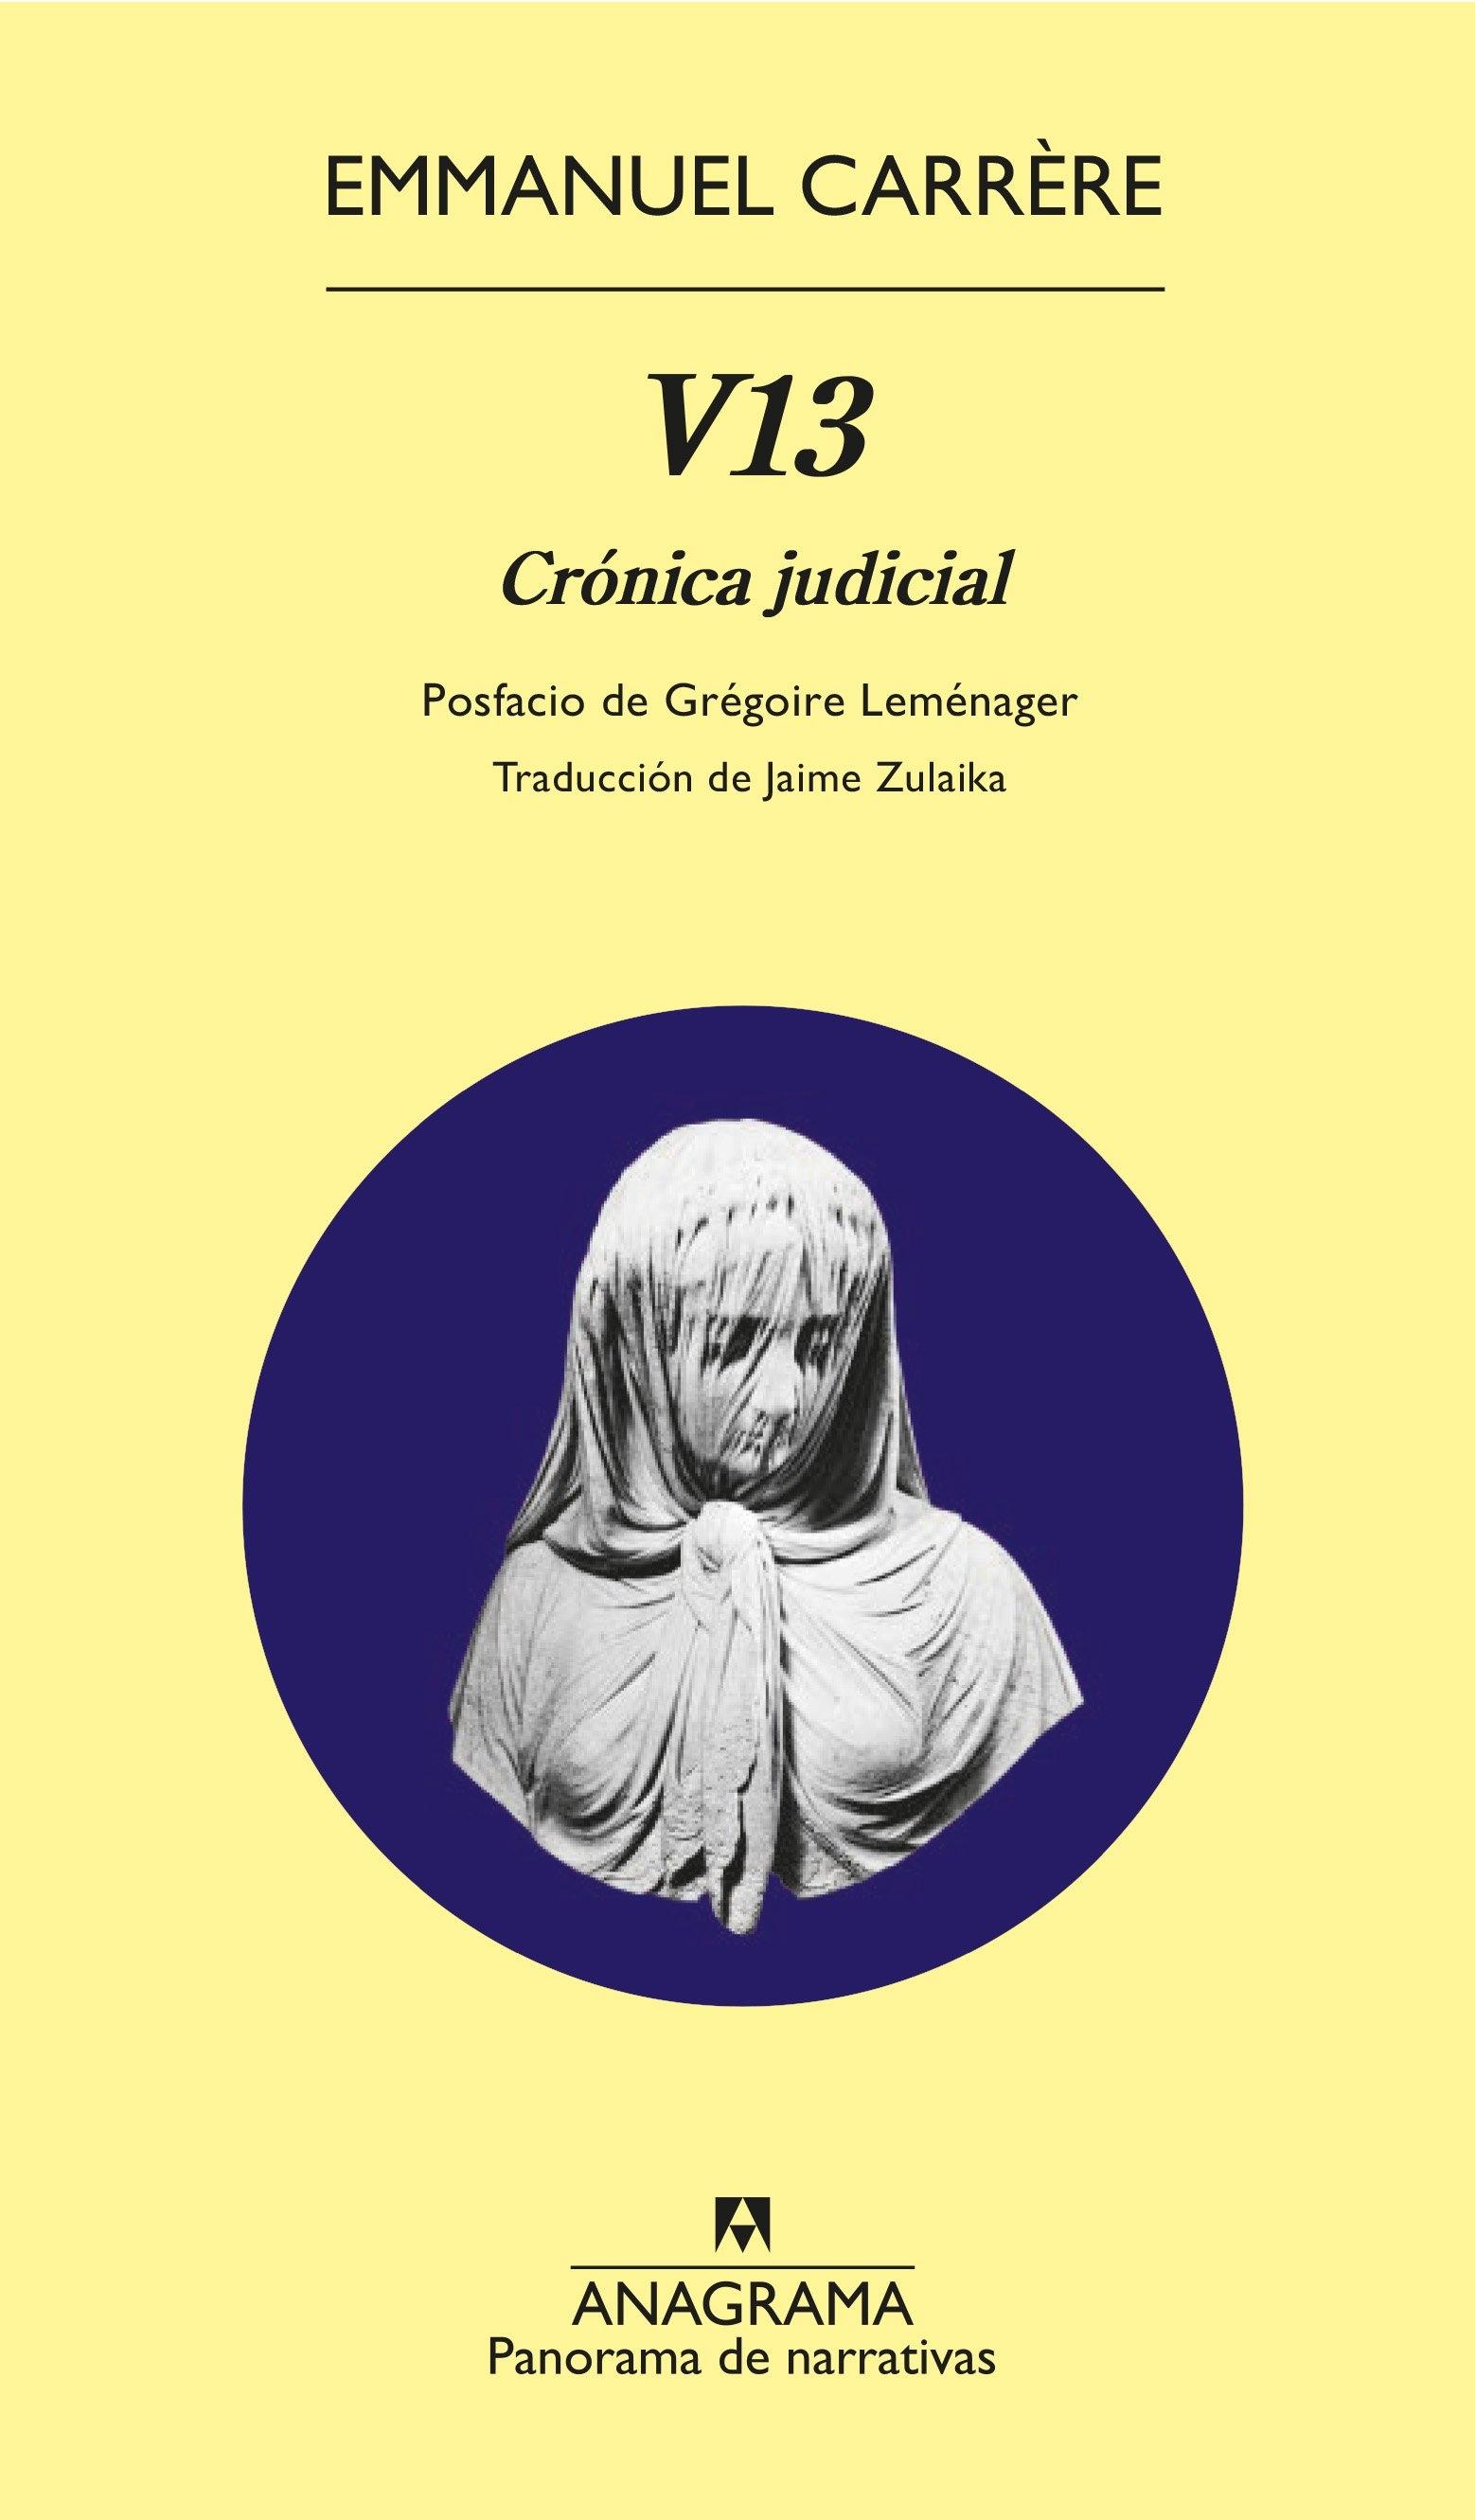 V13 "Crónica judicial"